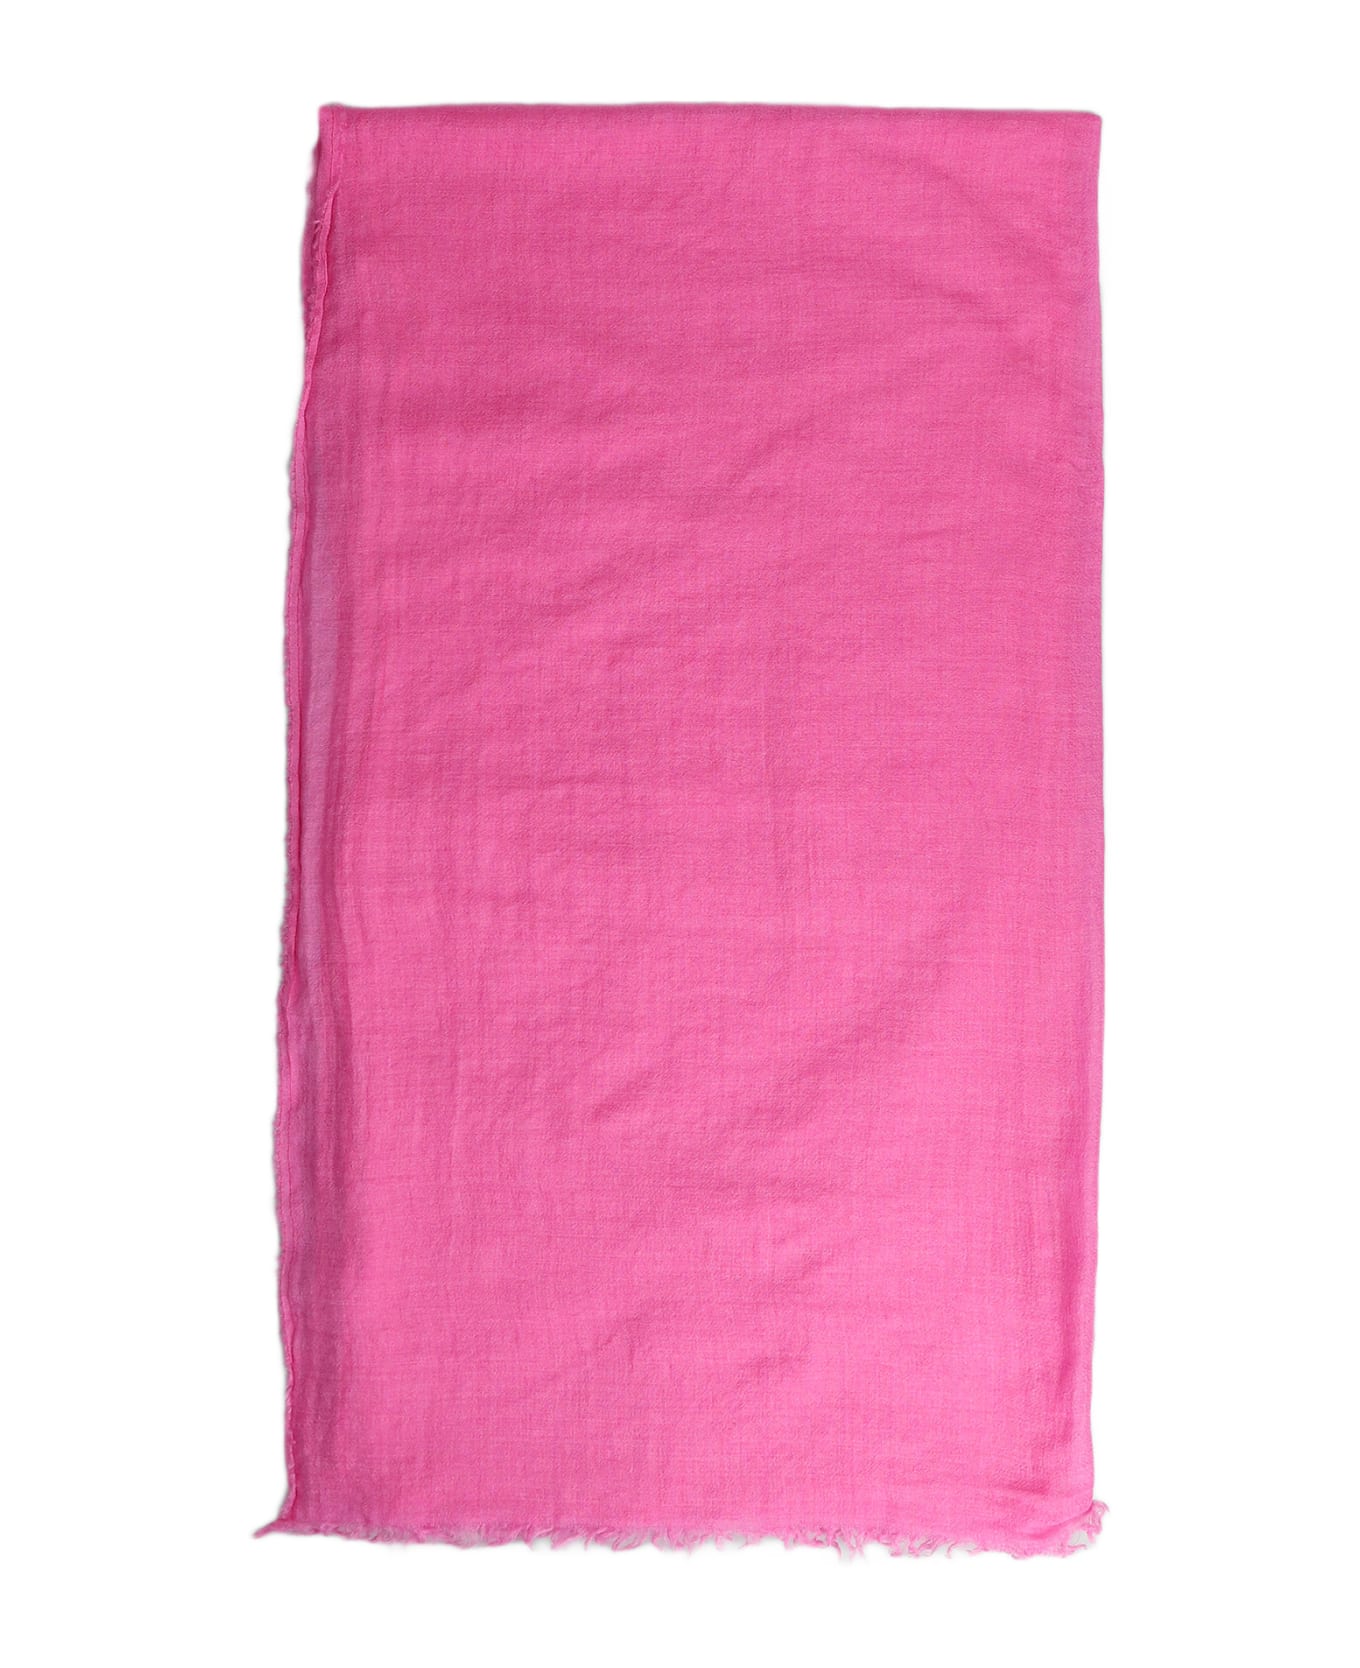 Rick Owens Ginny Scarve In Rose-pink Cashmere - rose-pink